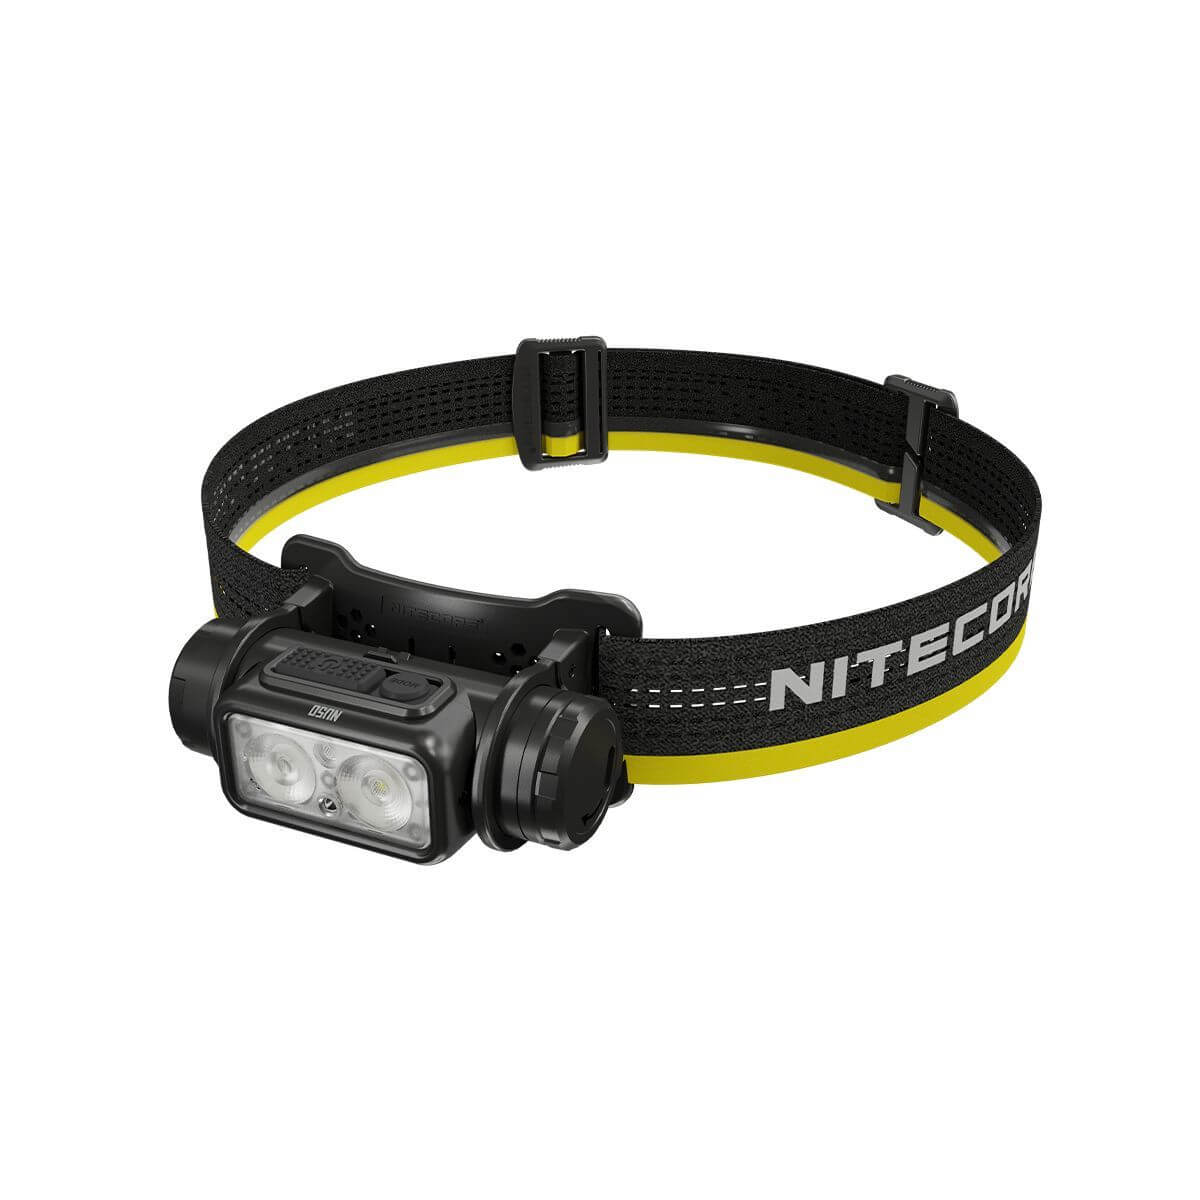 Nitecore NU50 Superior Performance High Capacity USB-C Rechargeable Headlamp